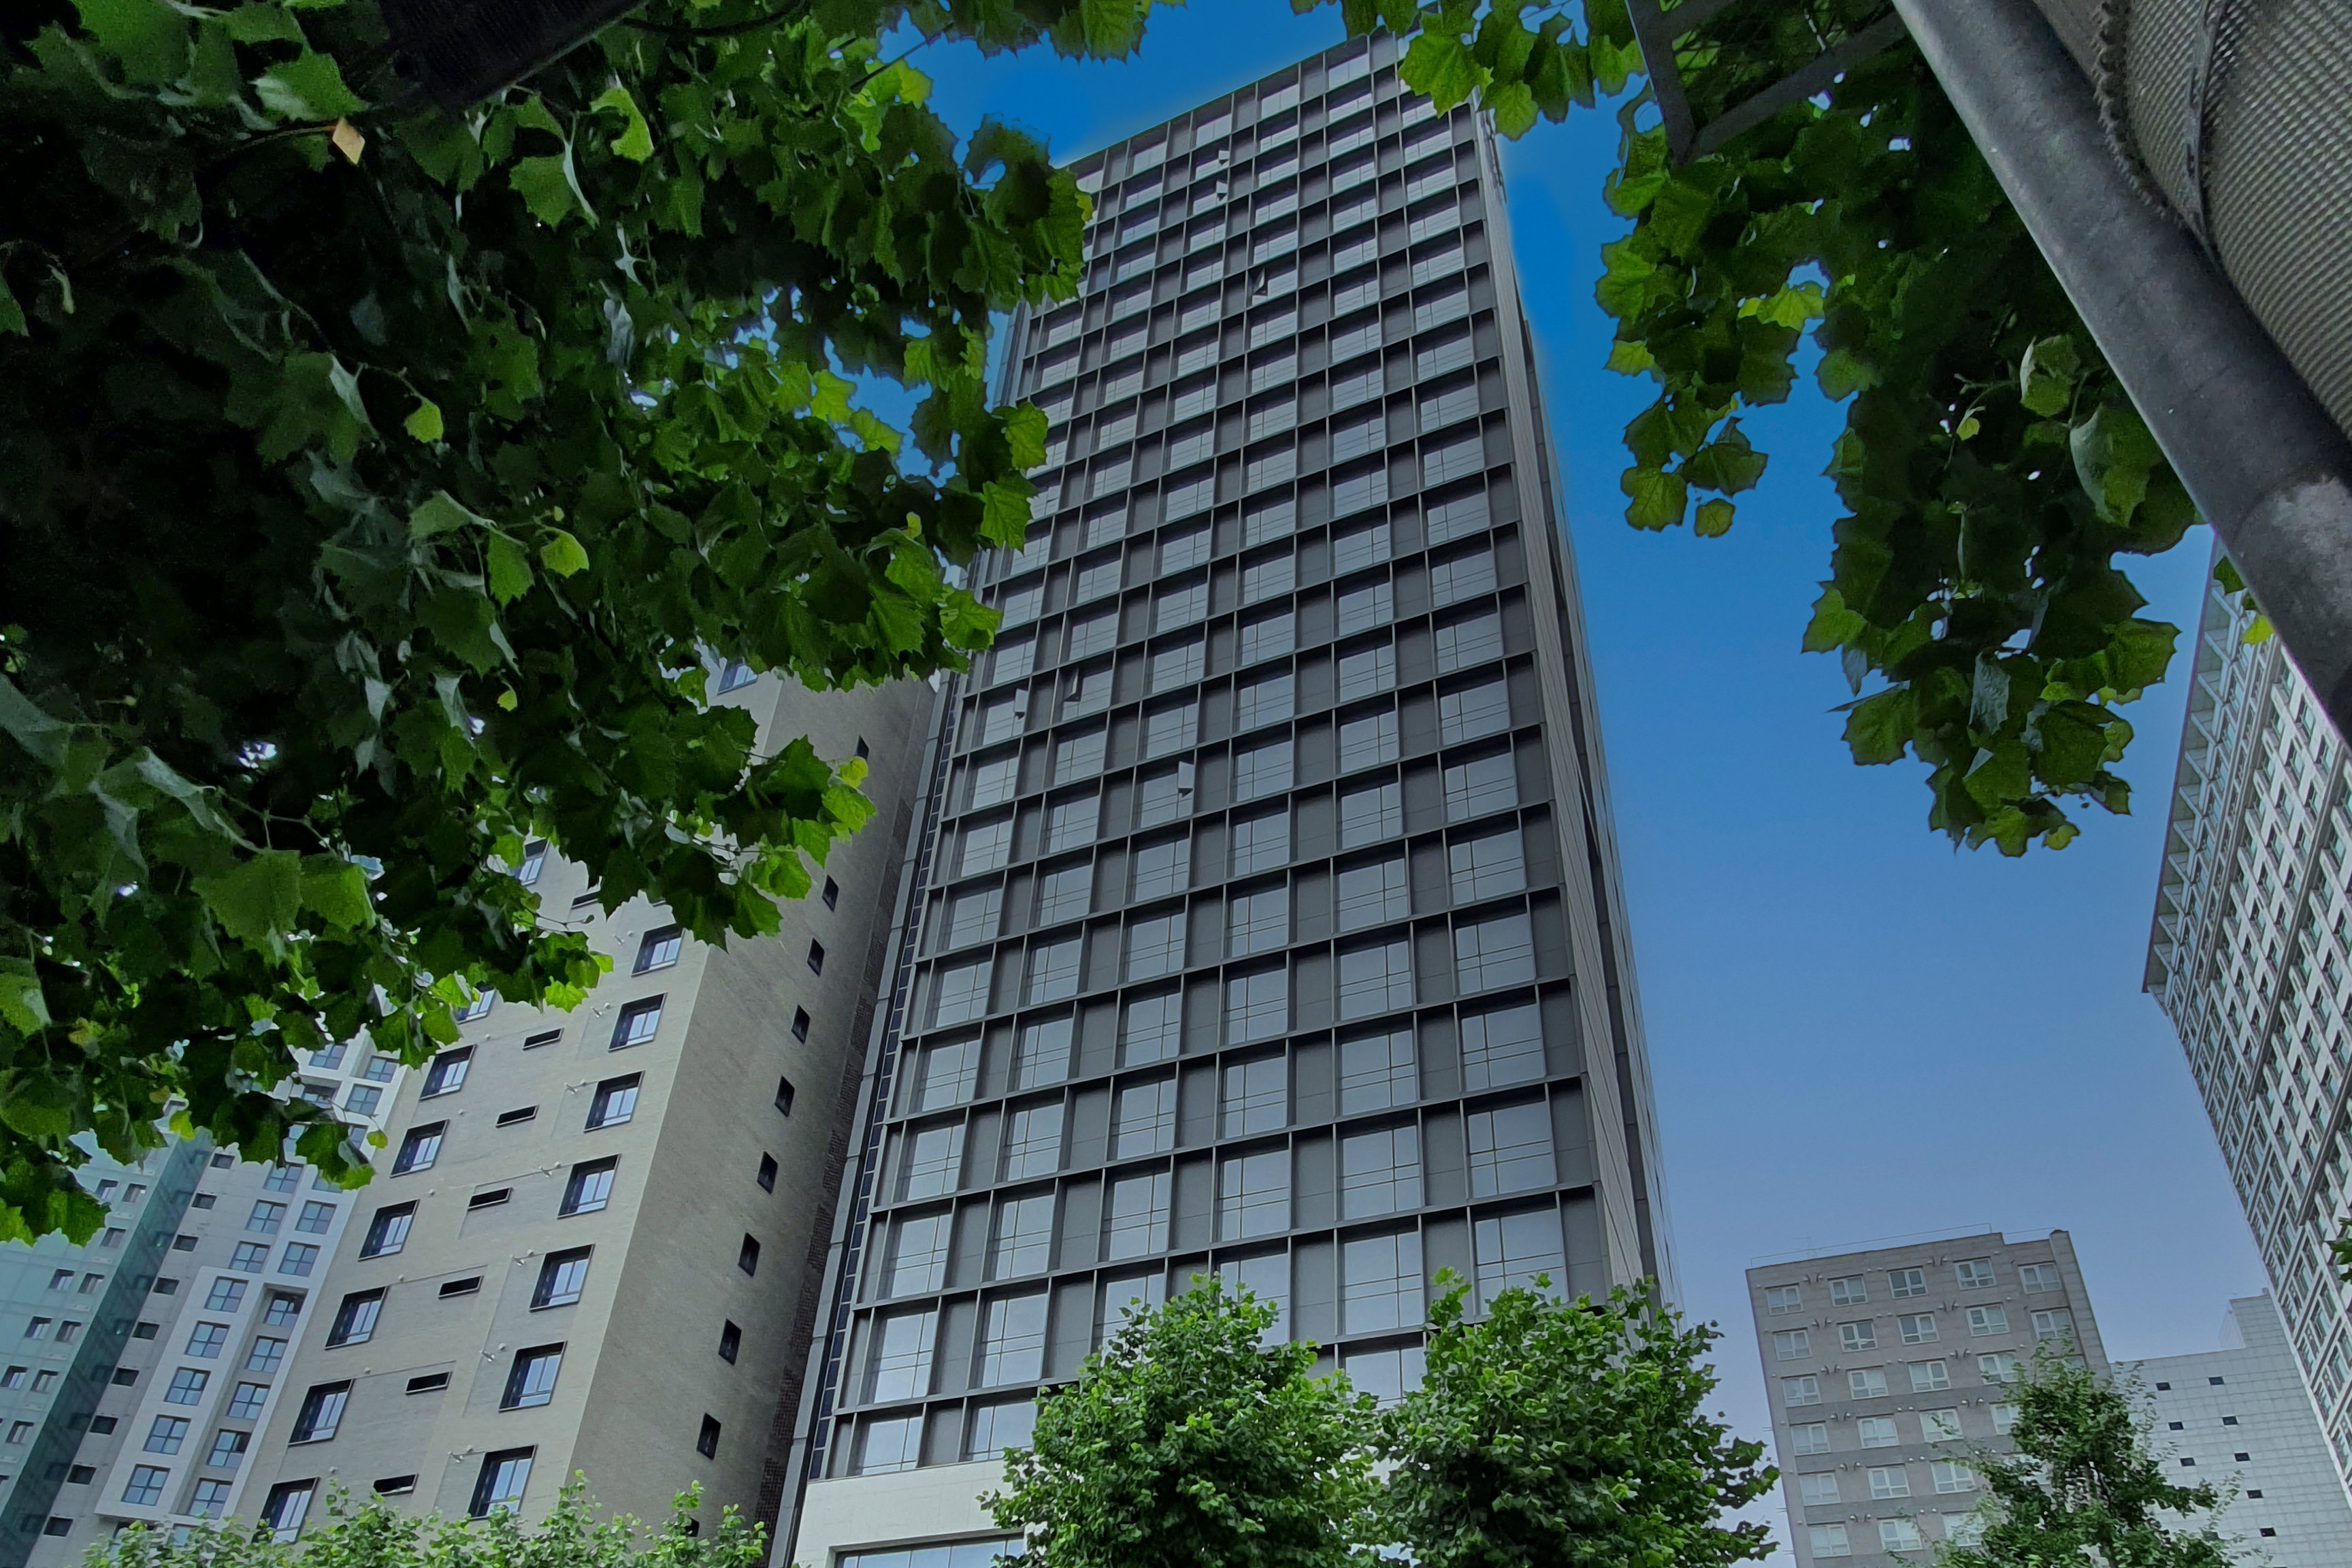 Shilla Stay Seocho0 : Tall hotel building viewed through roadside trees